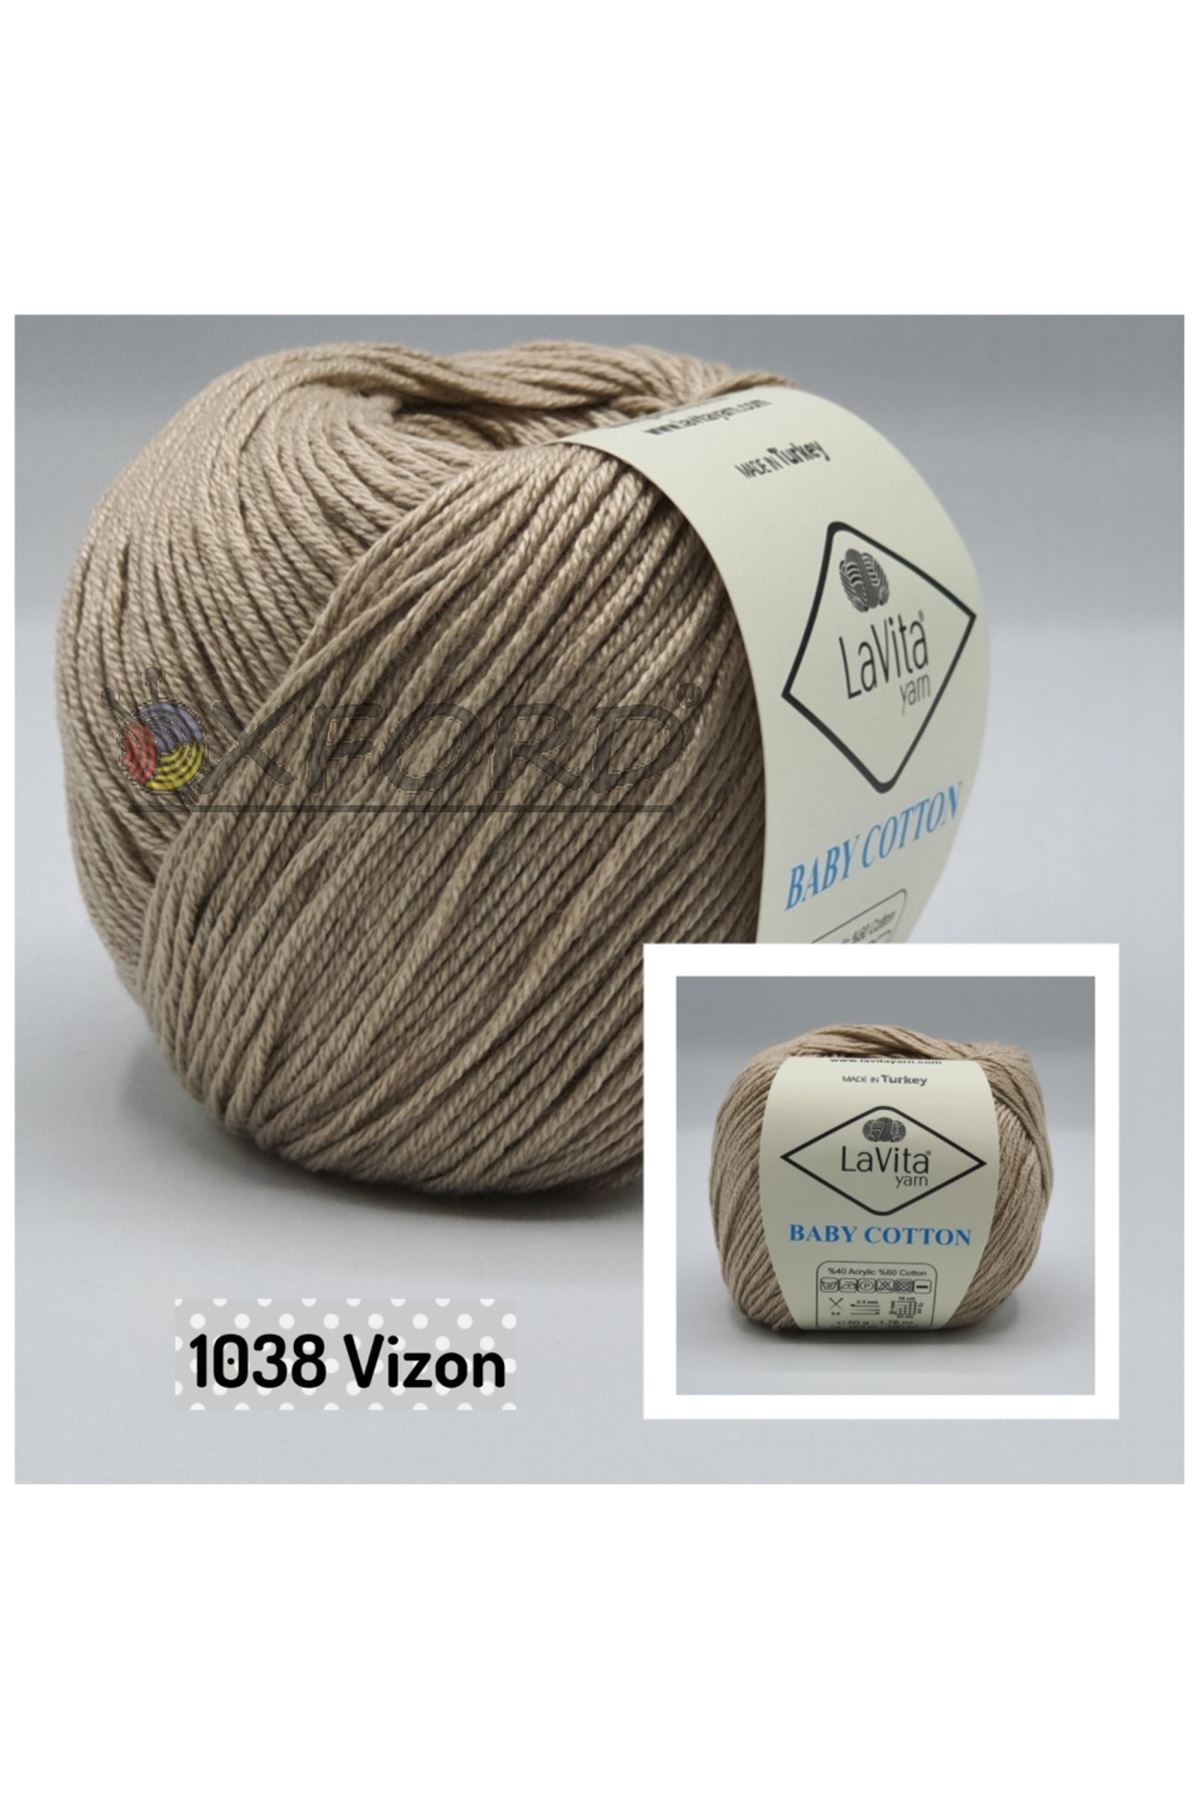 Lavita Baby Cotton 1038 Vizon